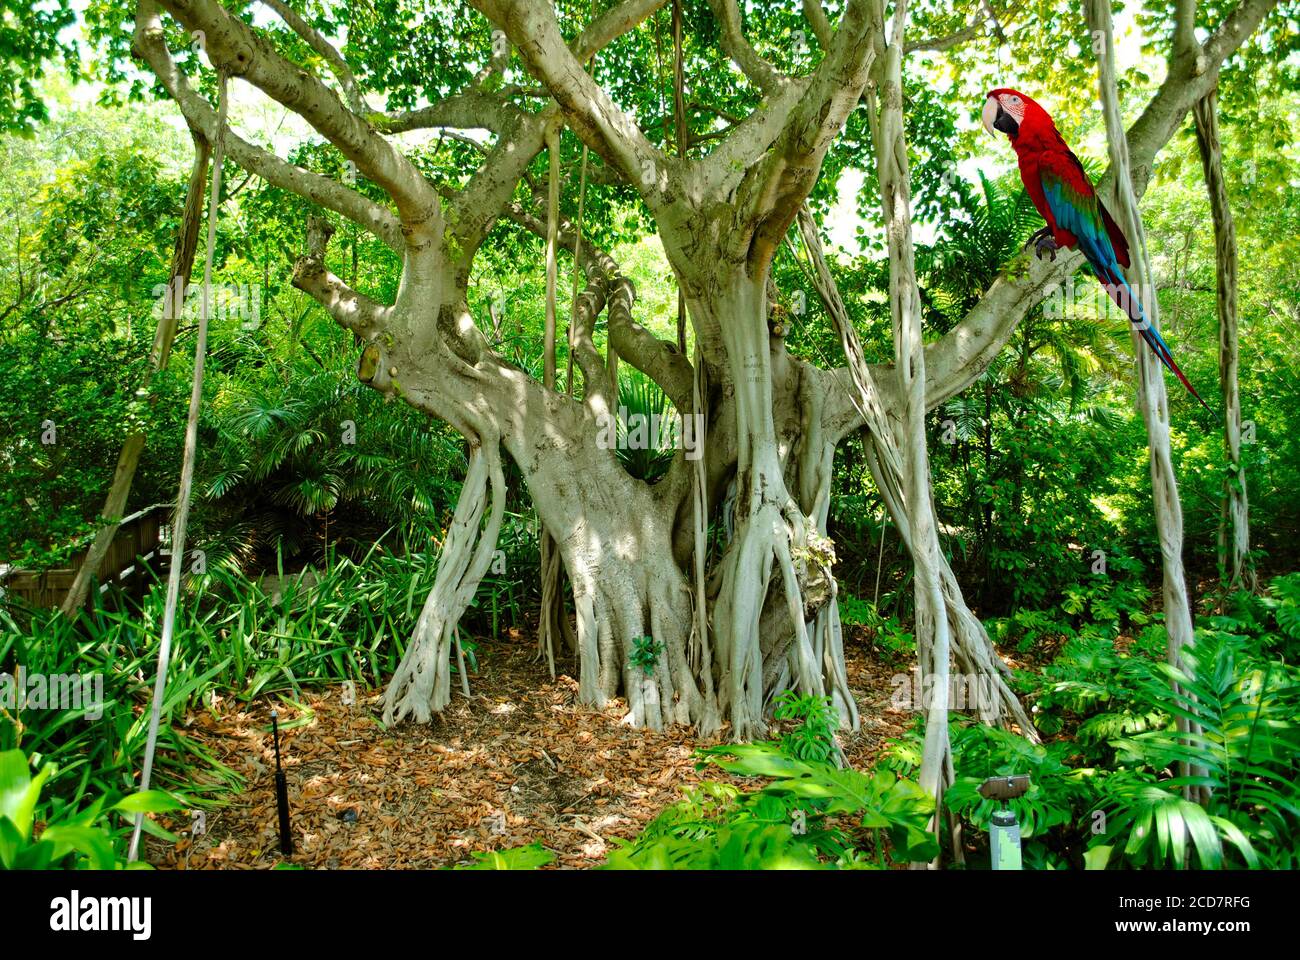 Scarlet macaw Latin name Ara macao perched on a Banyan tree Latin name Ficus benghalensis Stock Photo